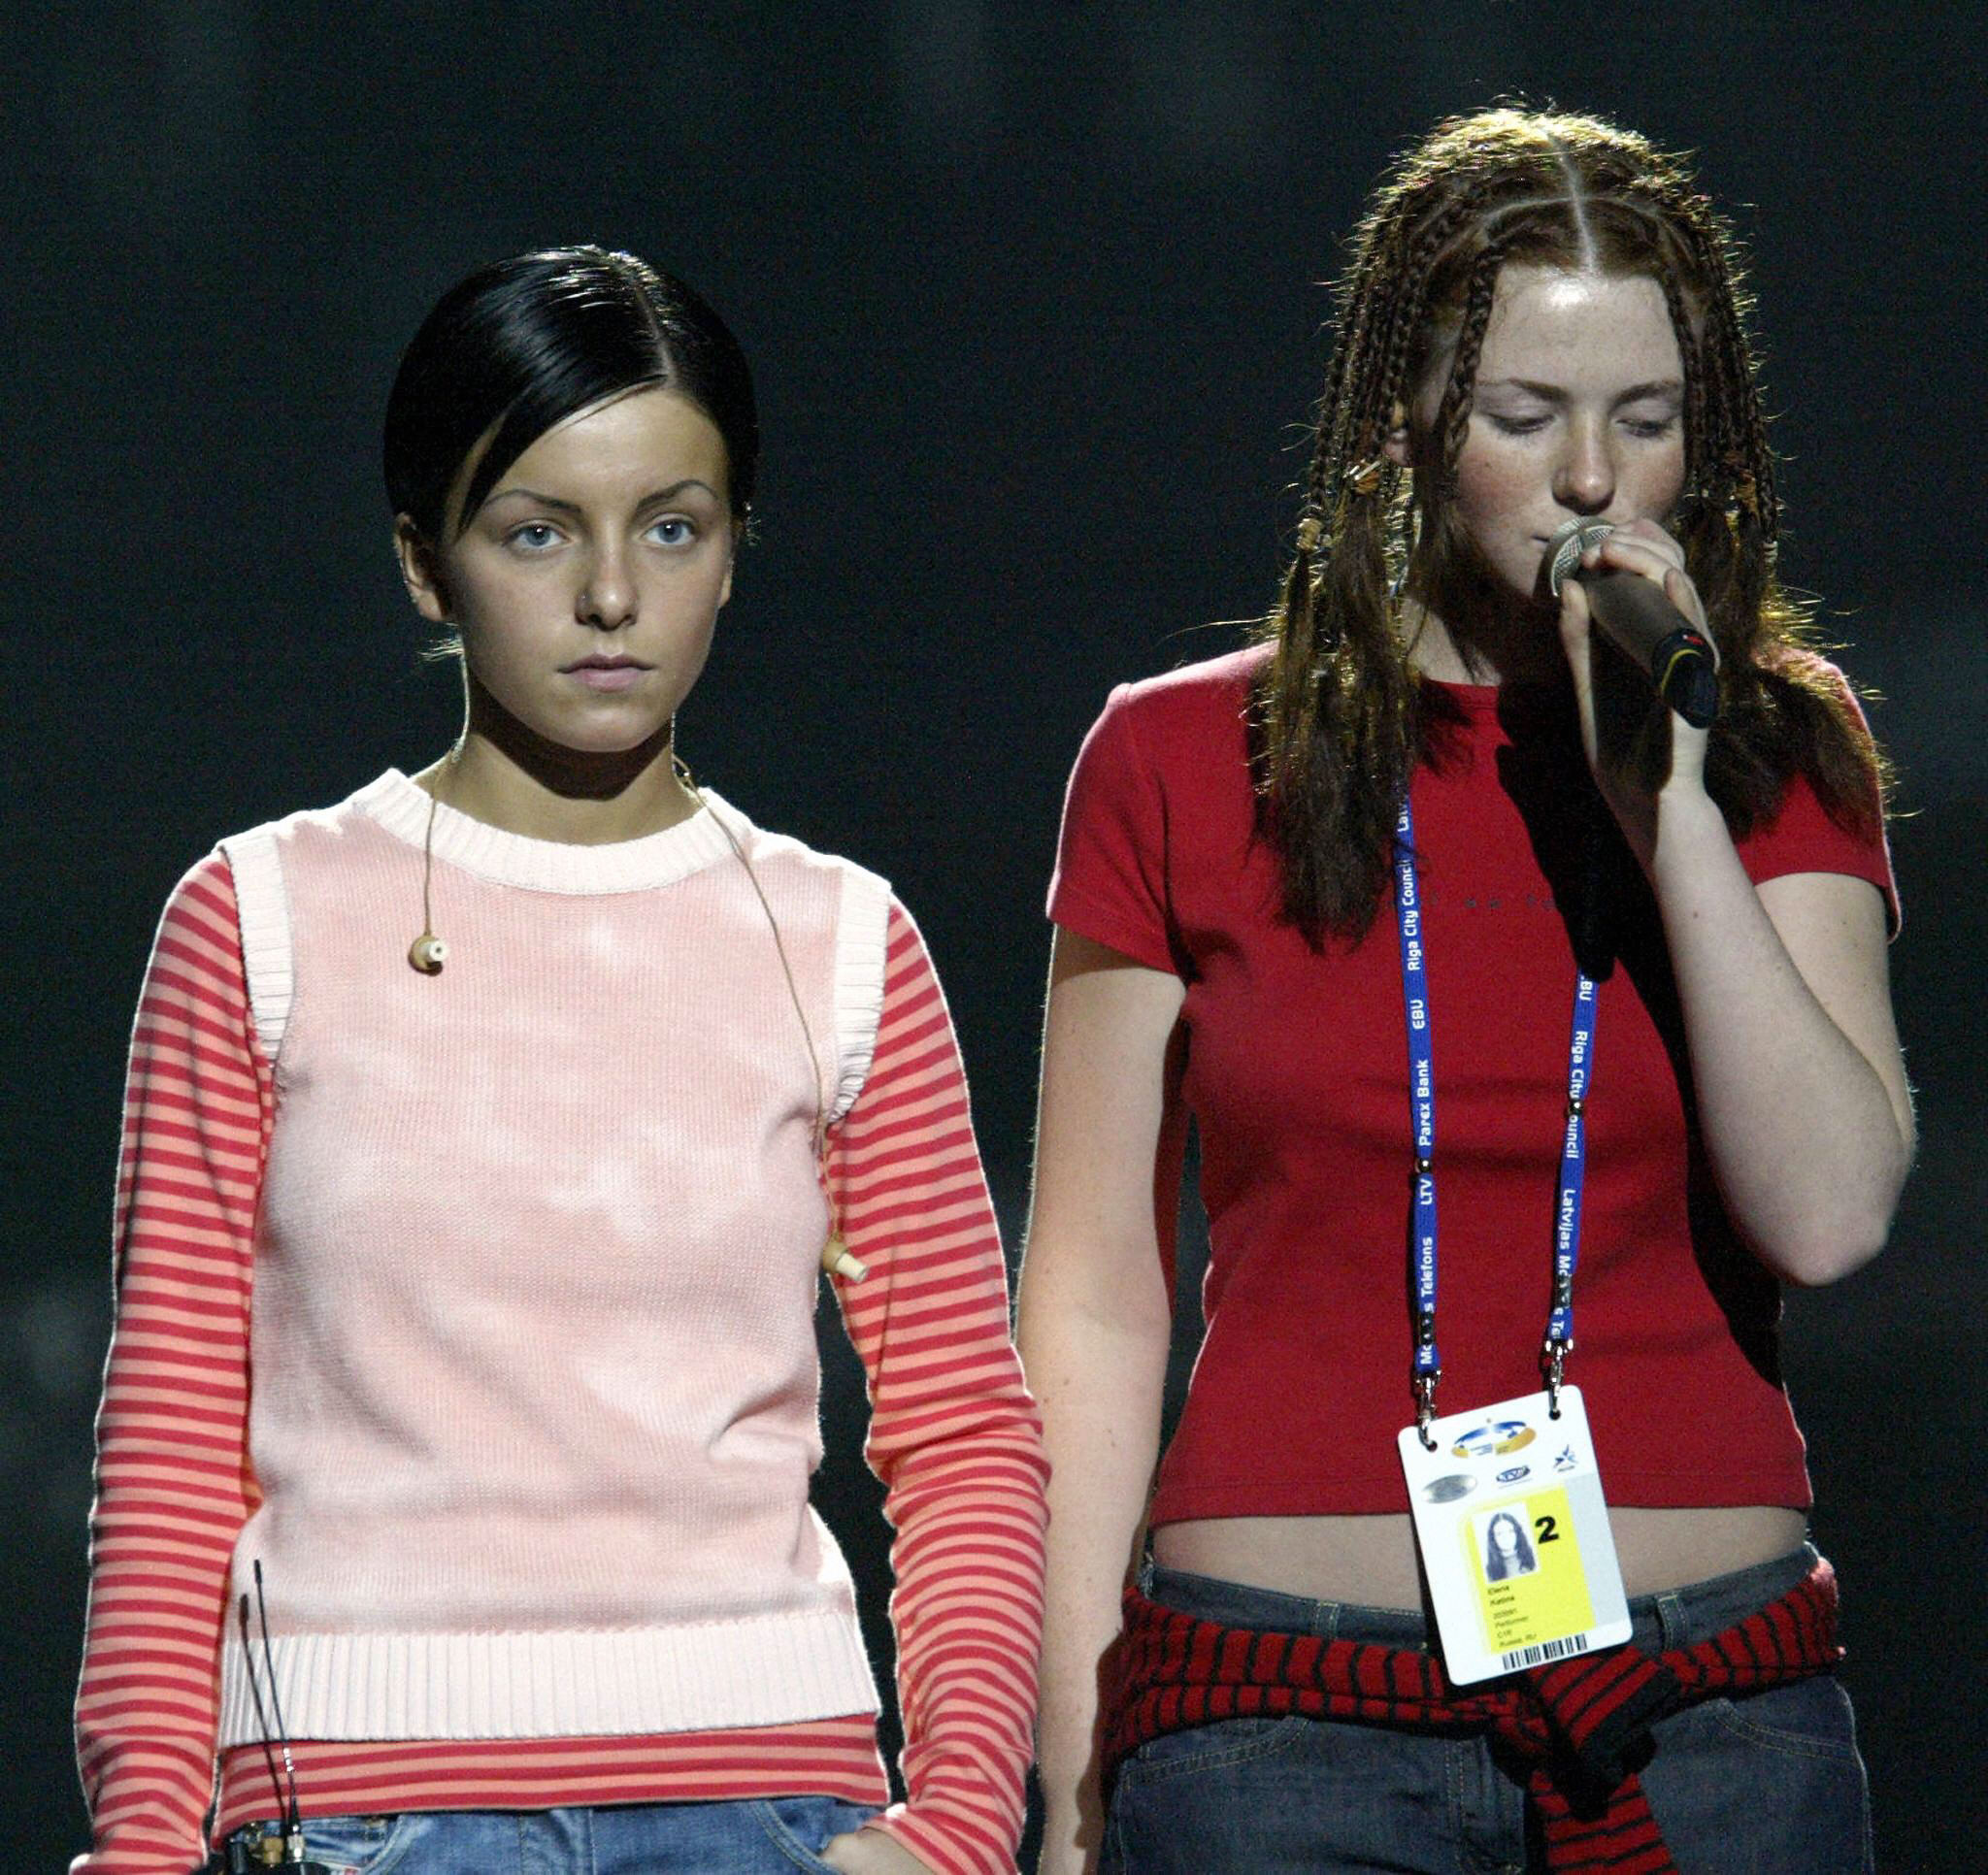 Eurovision 2003 Rehearsal